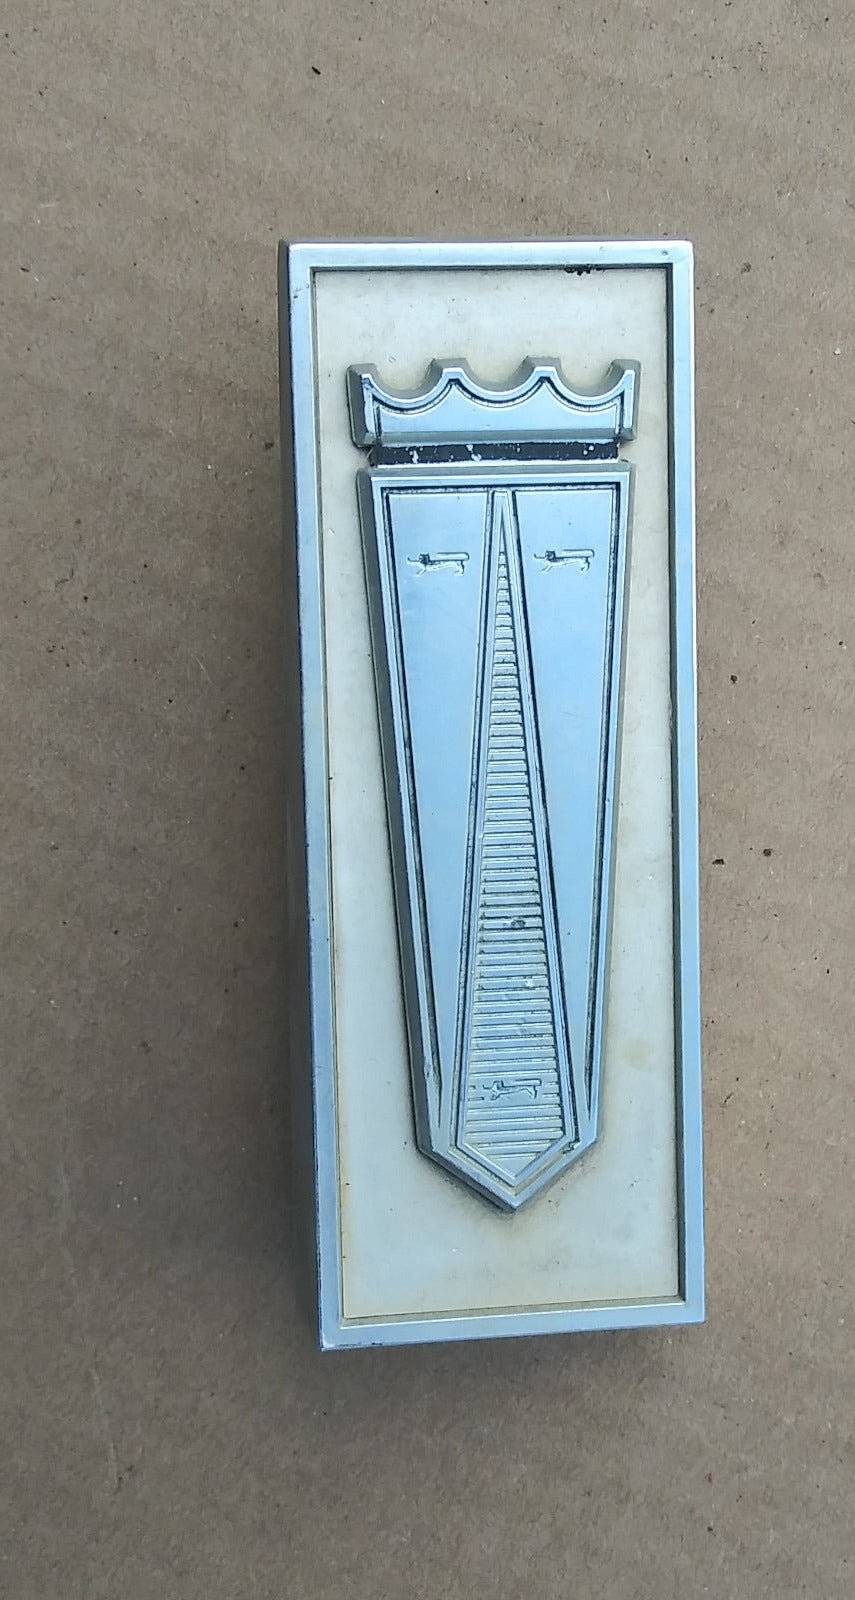 1965 Ford Galaxie grille emblem